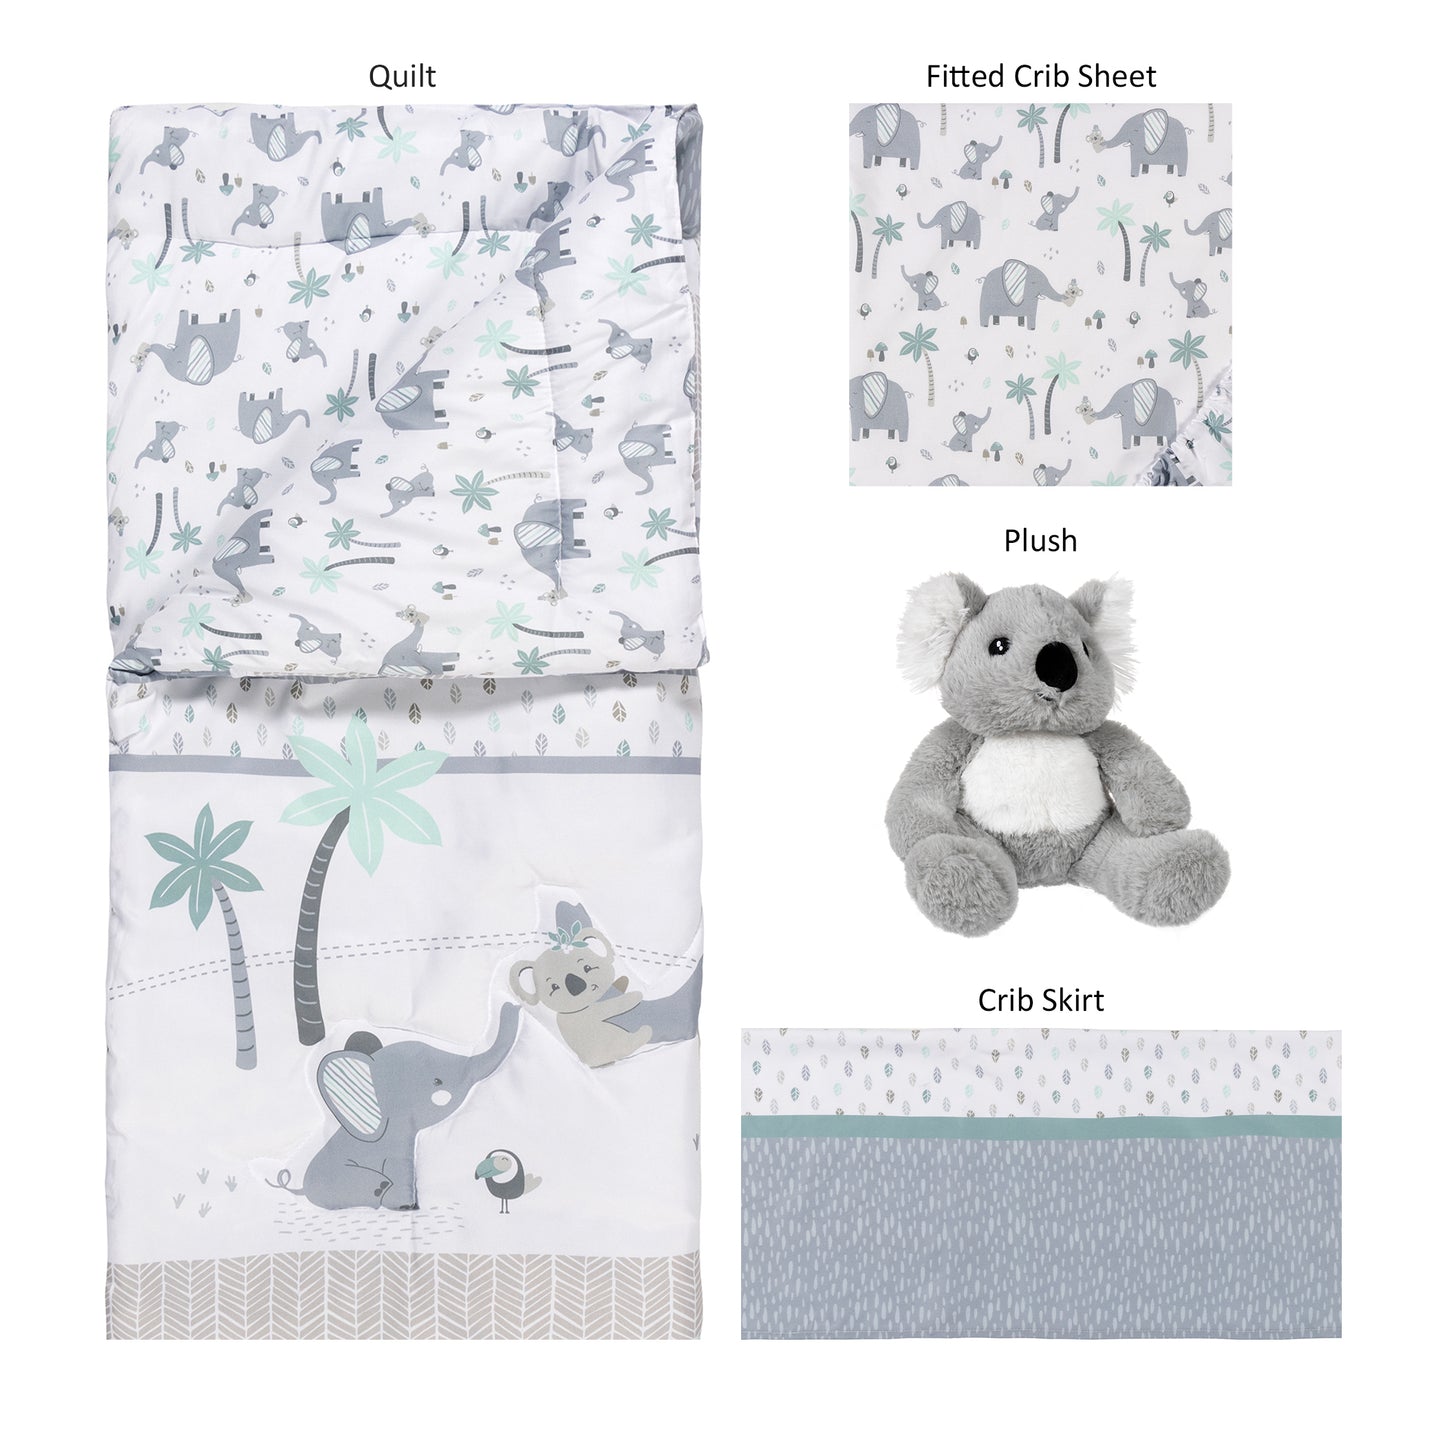  Ellie & Friends 4 Piece Crib Bedding Set ; pieces laid out includes nursery quilt, crib sheet, koala plush toy, crib skirt